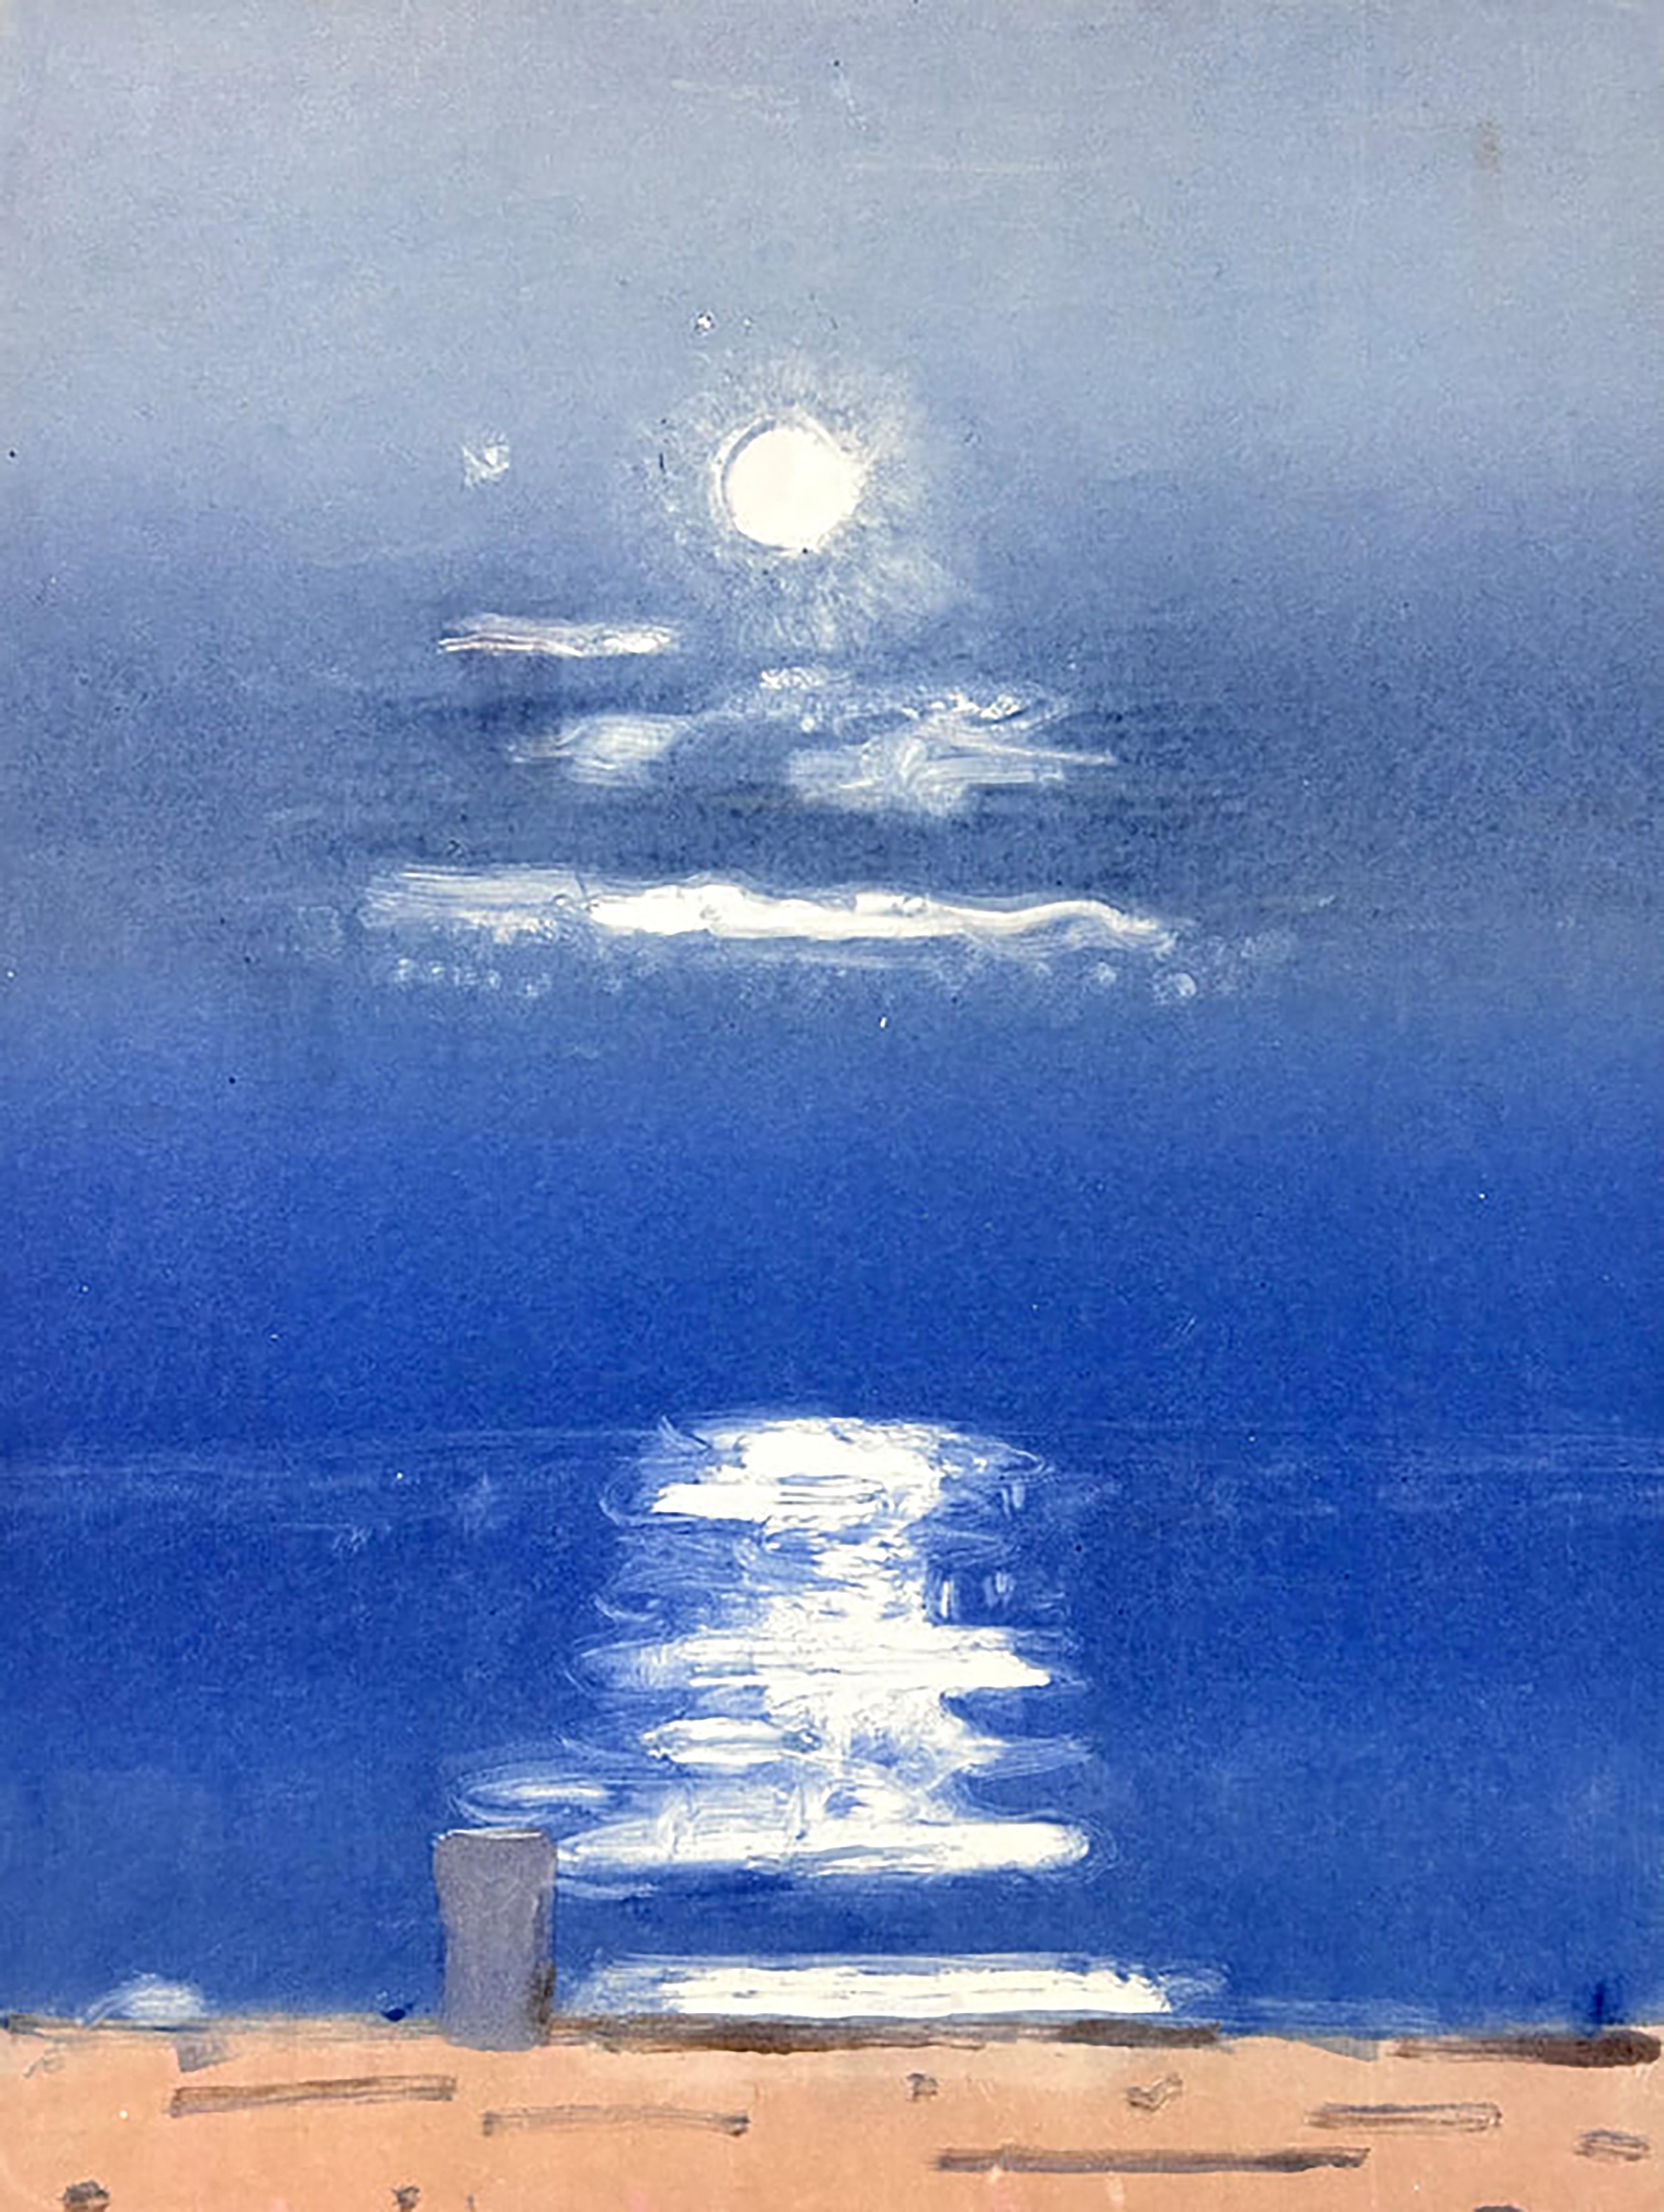 Moonlight on Water #6